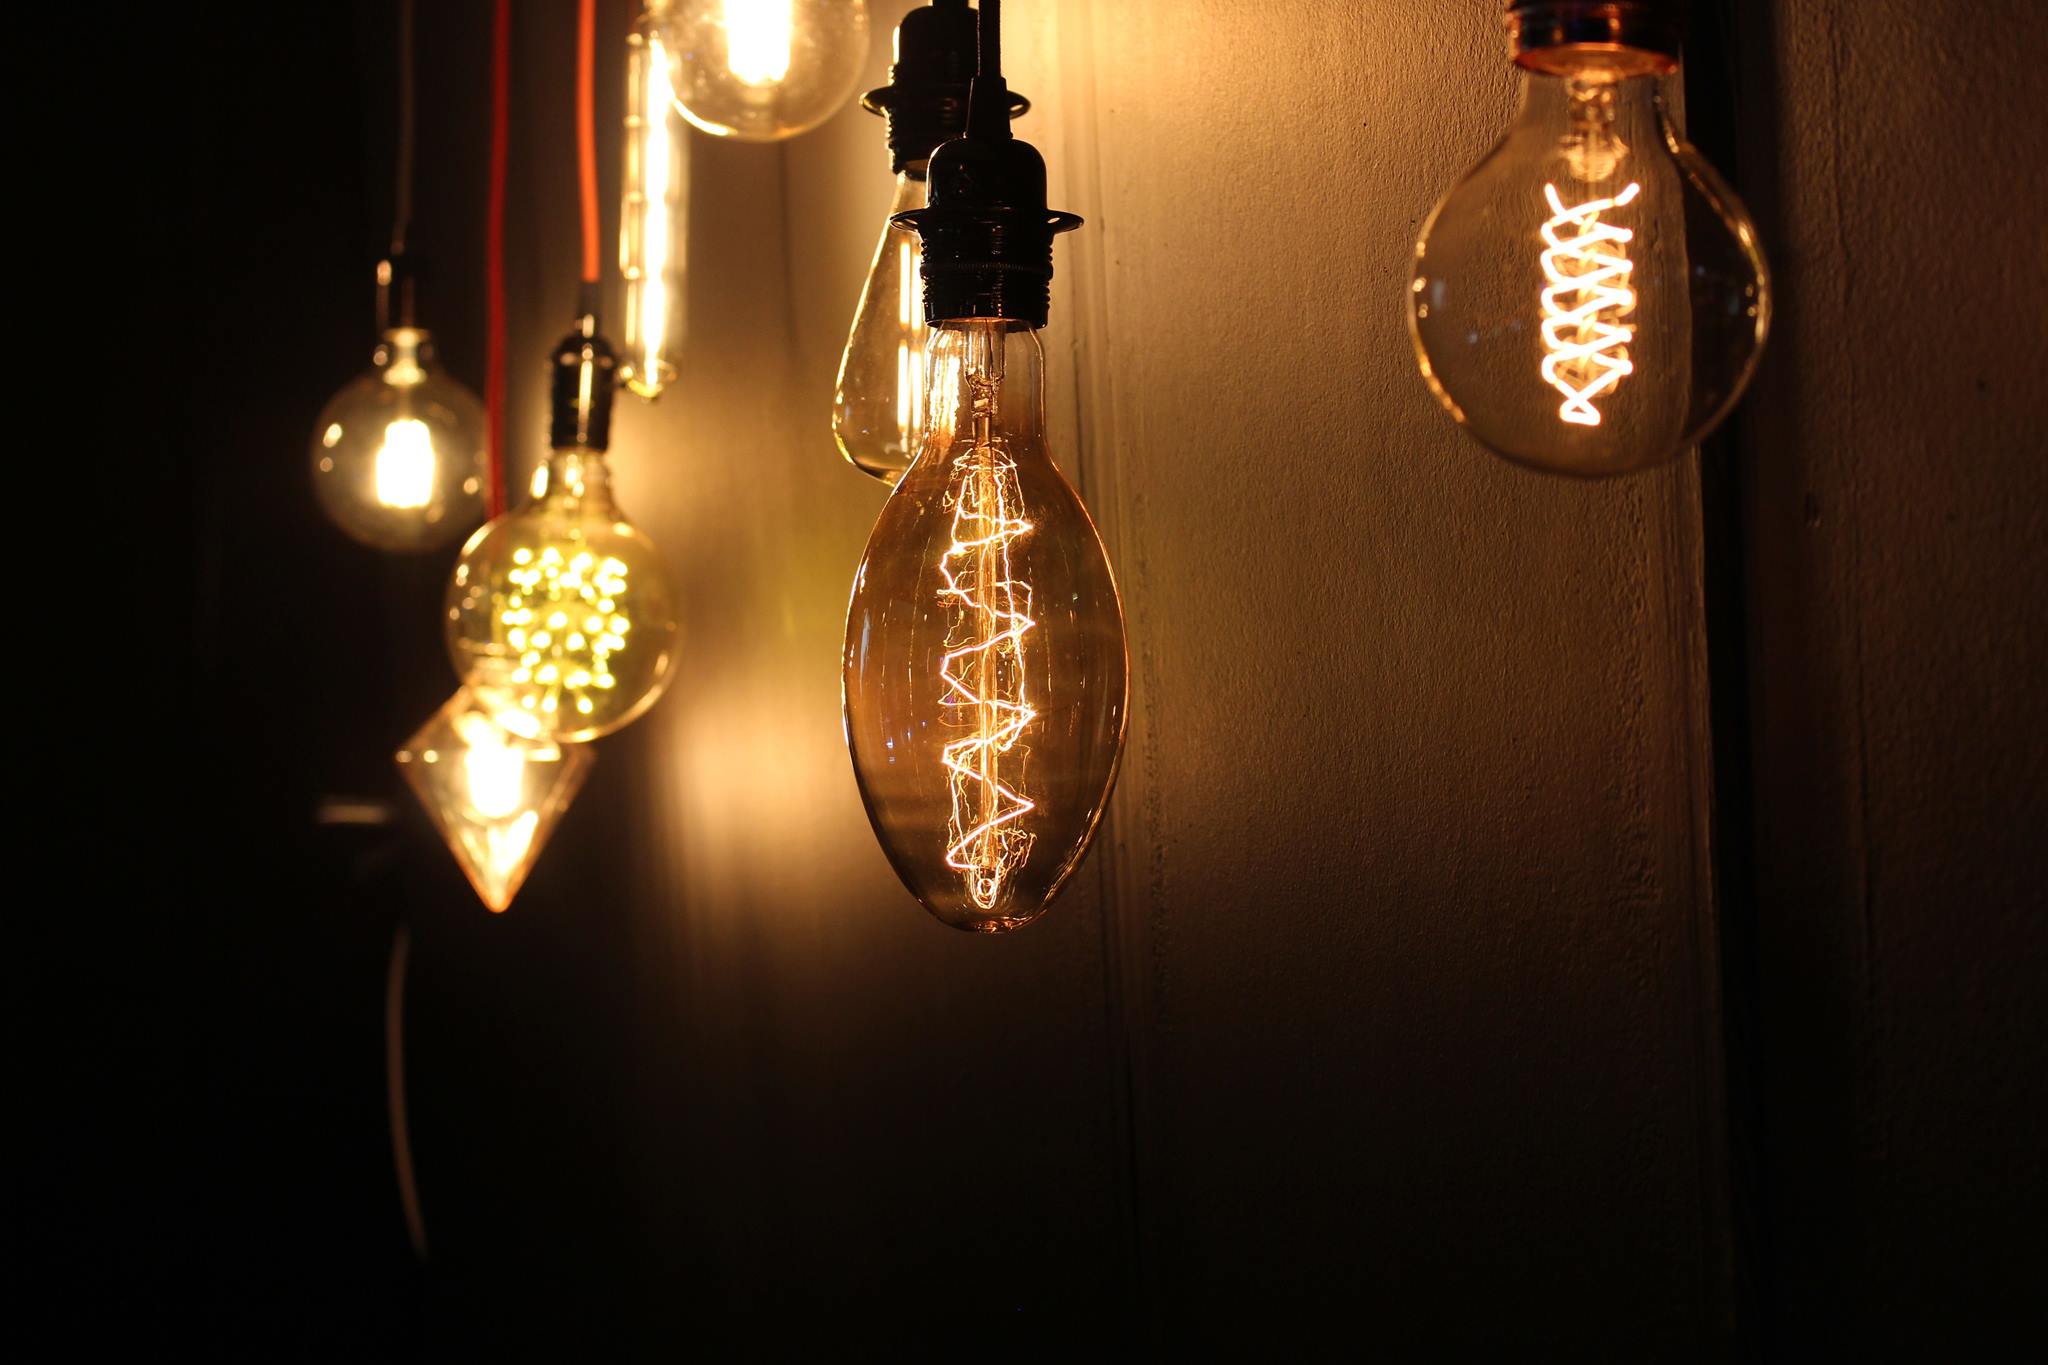 100percent design Kensington olympia london industrial vintage light bulb cluster design with energy saving LED